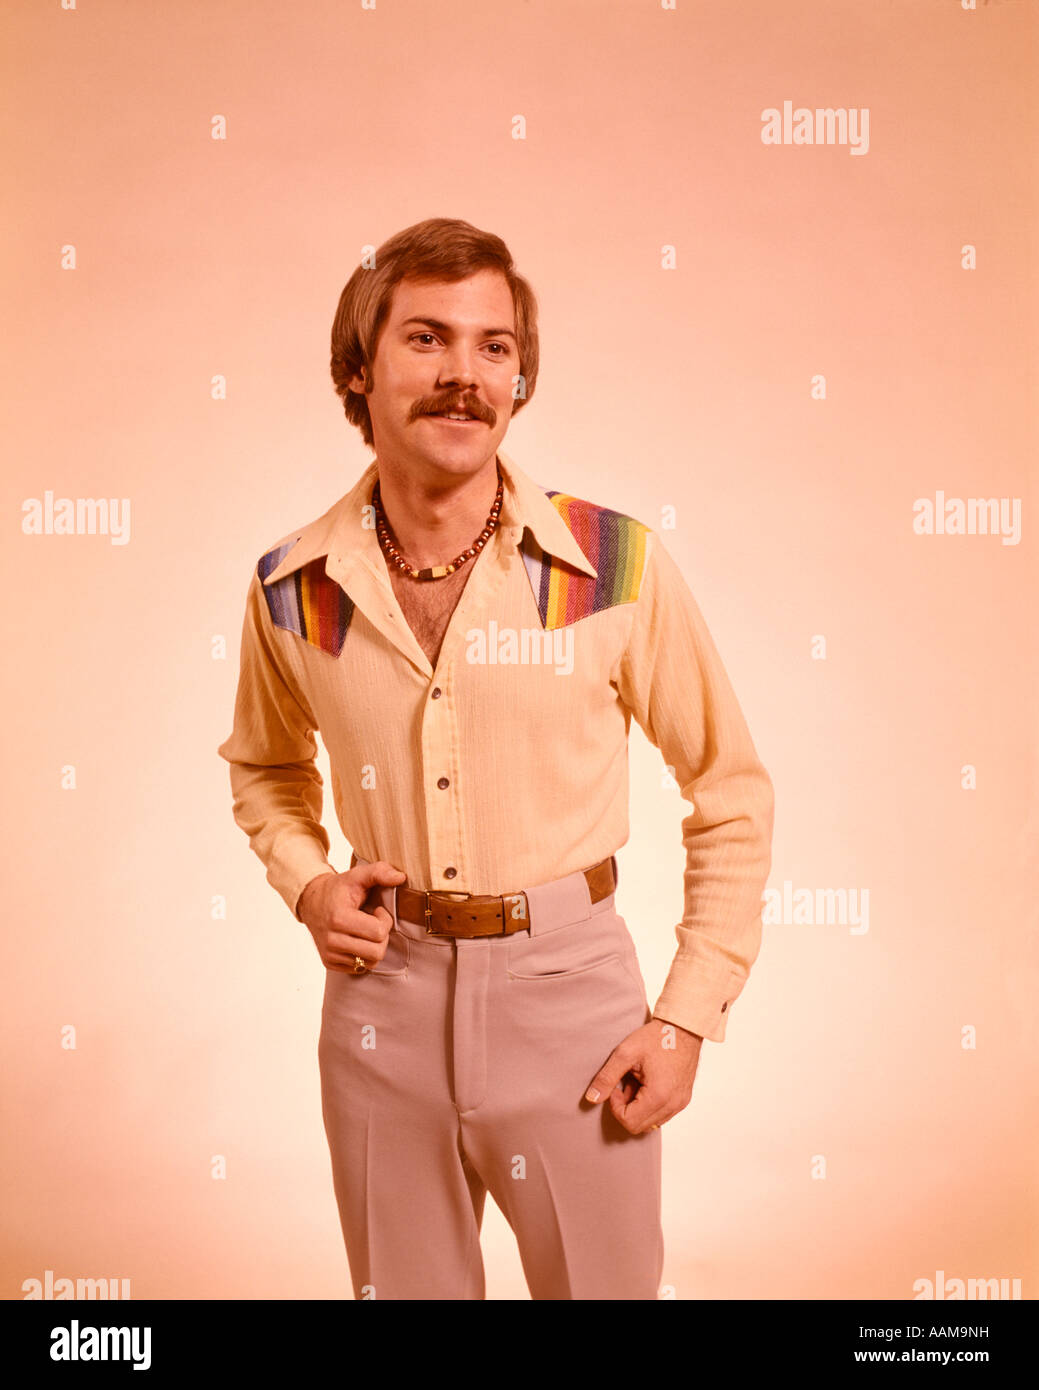 1970 1970s YOUNG MAN 3 4 FULL PORTRAIT MOUSTACHE NECKLACE CASUAL CLOTHES SHIRT PANTS FASHION STYLE RETRO Stock Photo